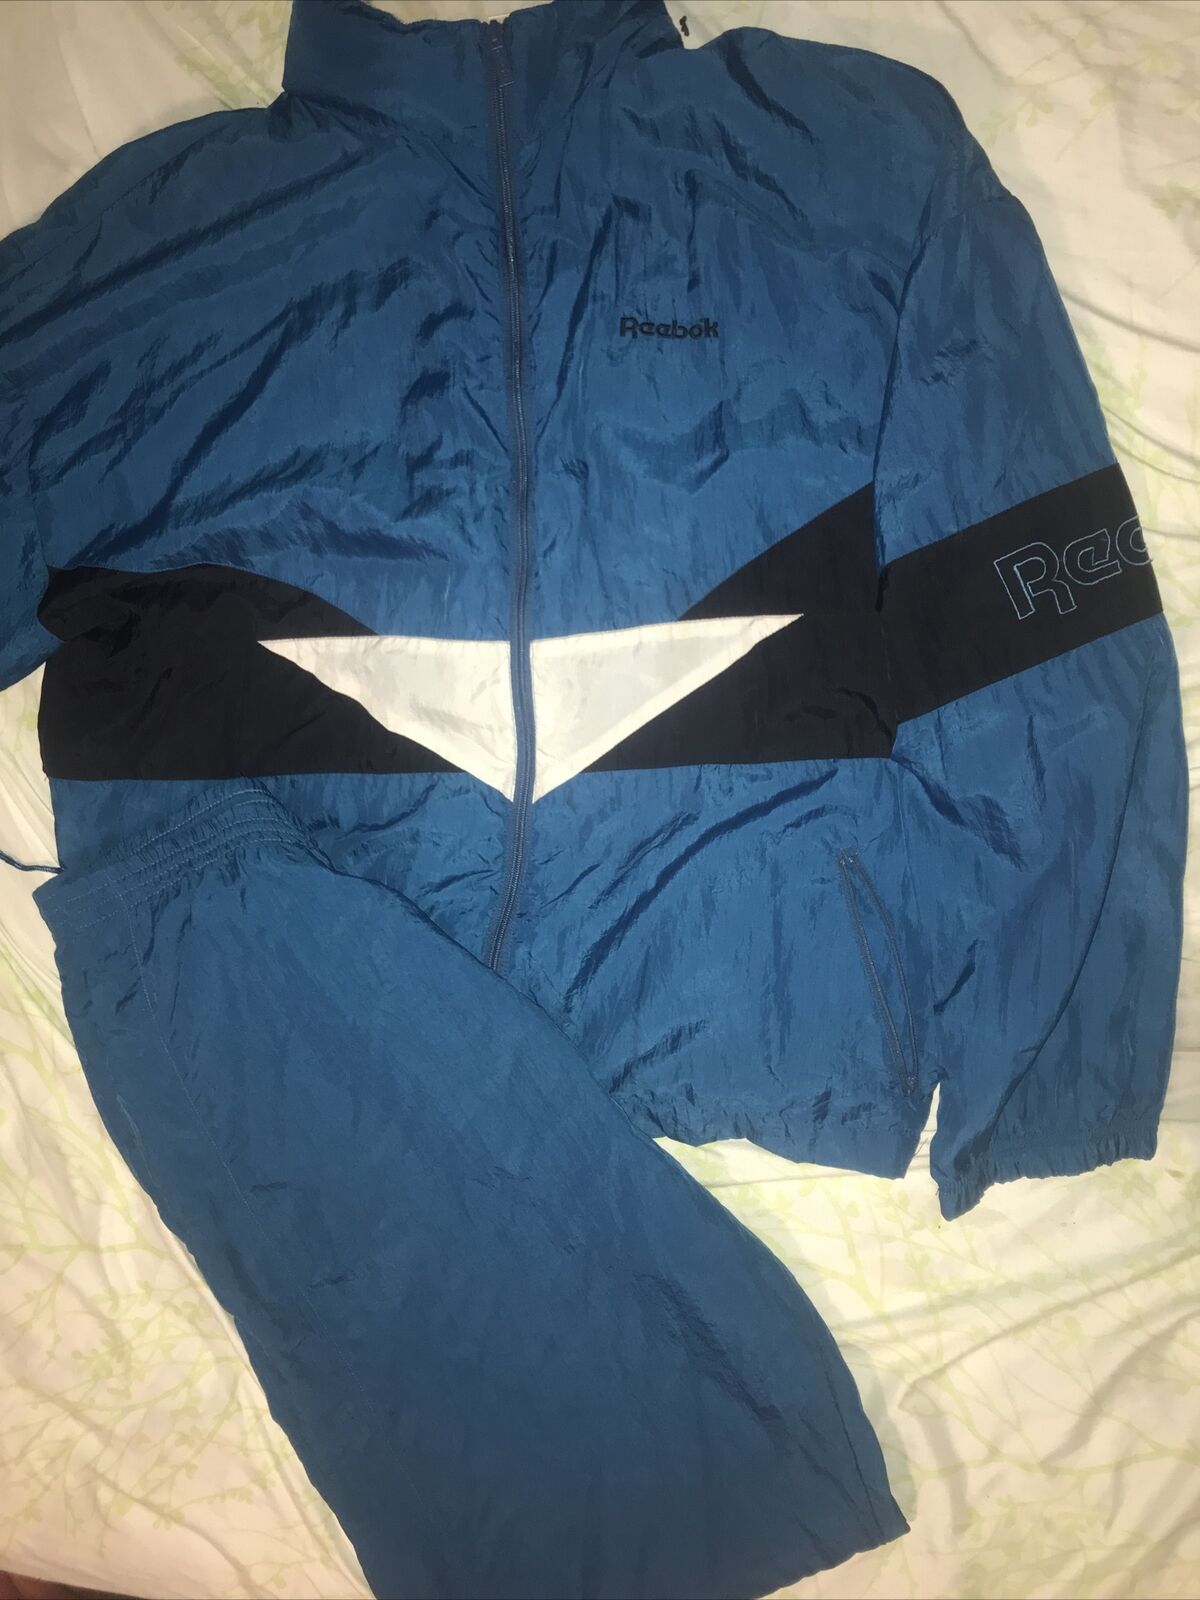 Vintage Reebok Windbreaker Track Suit Jacket Pants Xl 90s Blue White Black